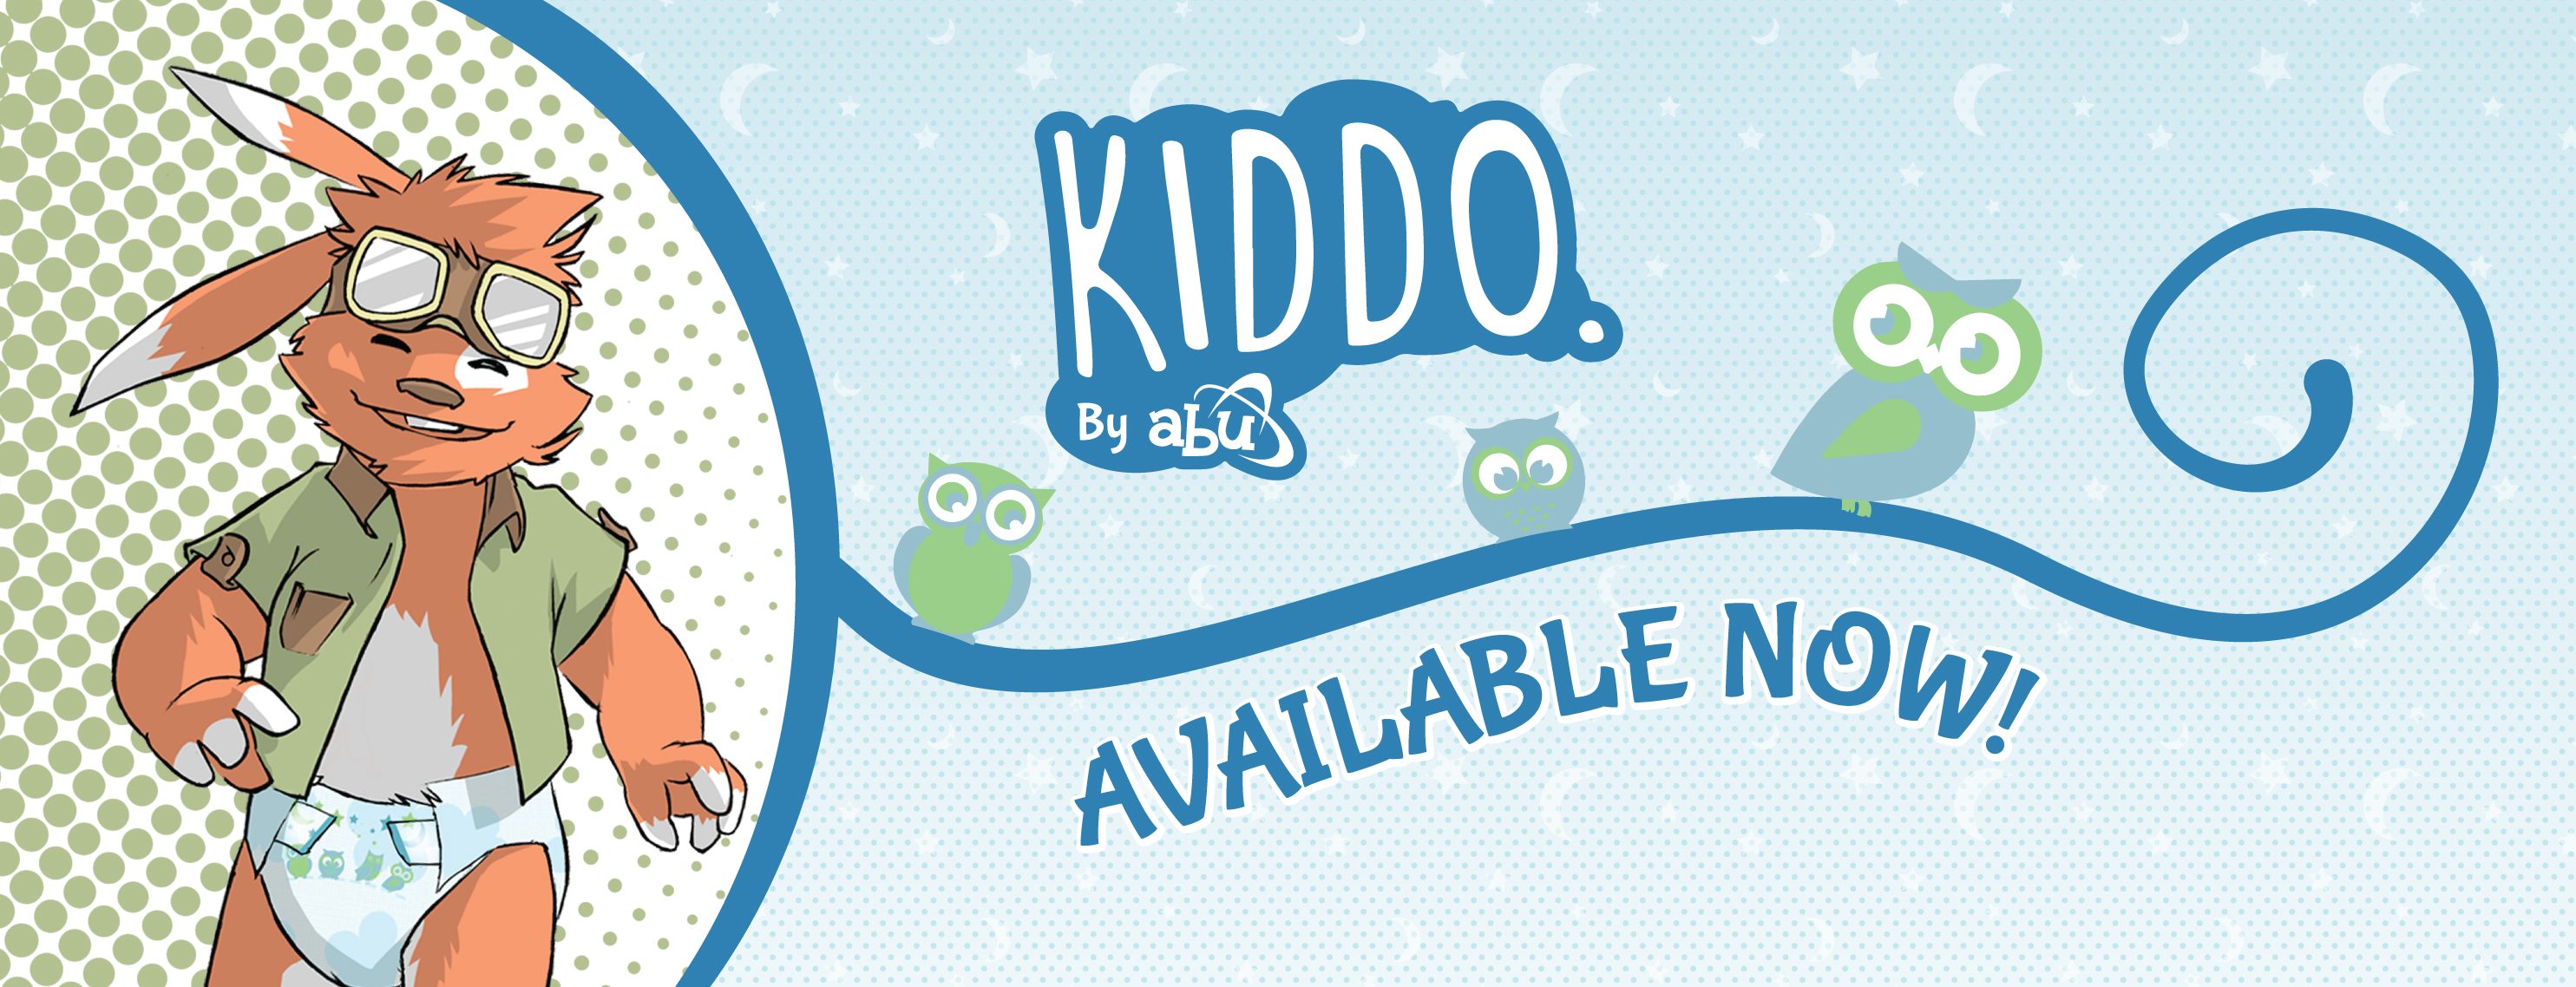 kiddo_website_banner-1